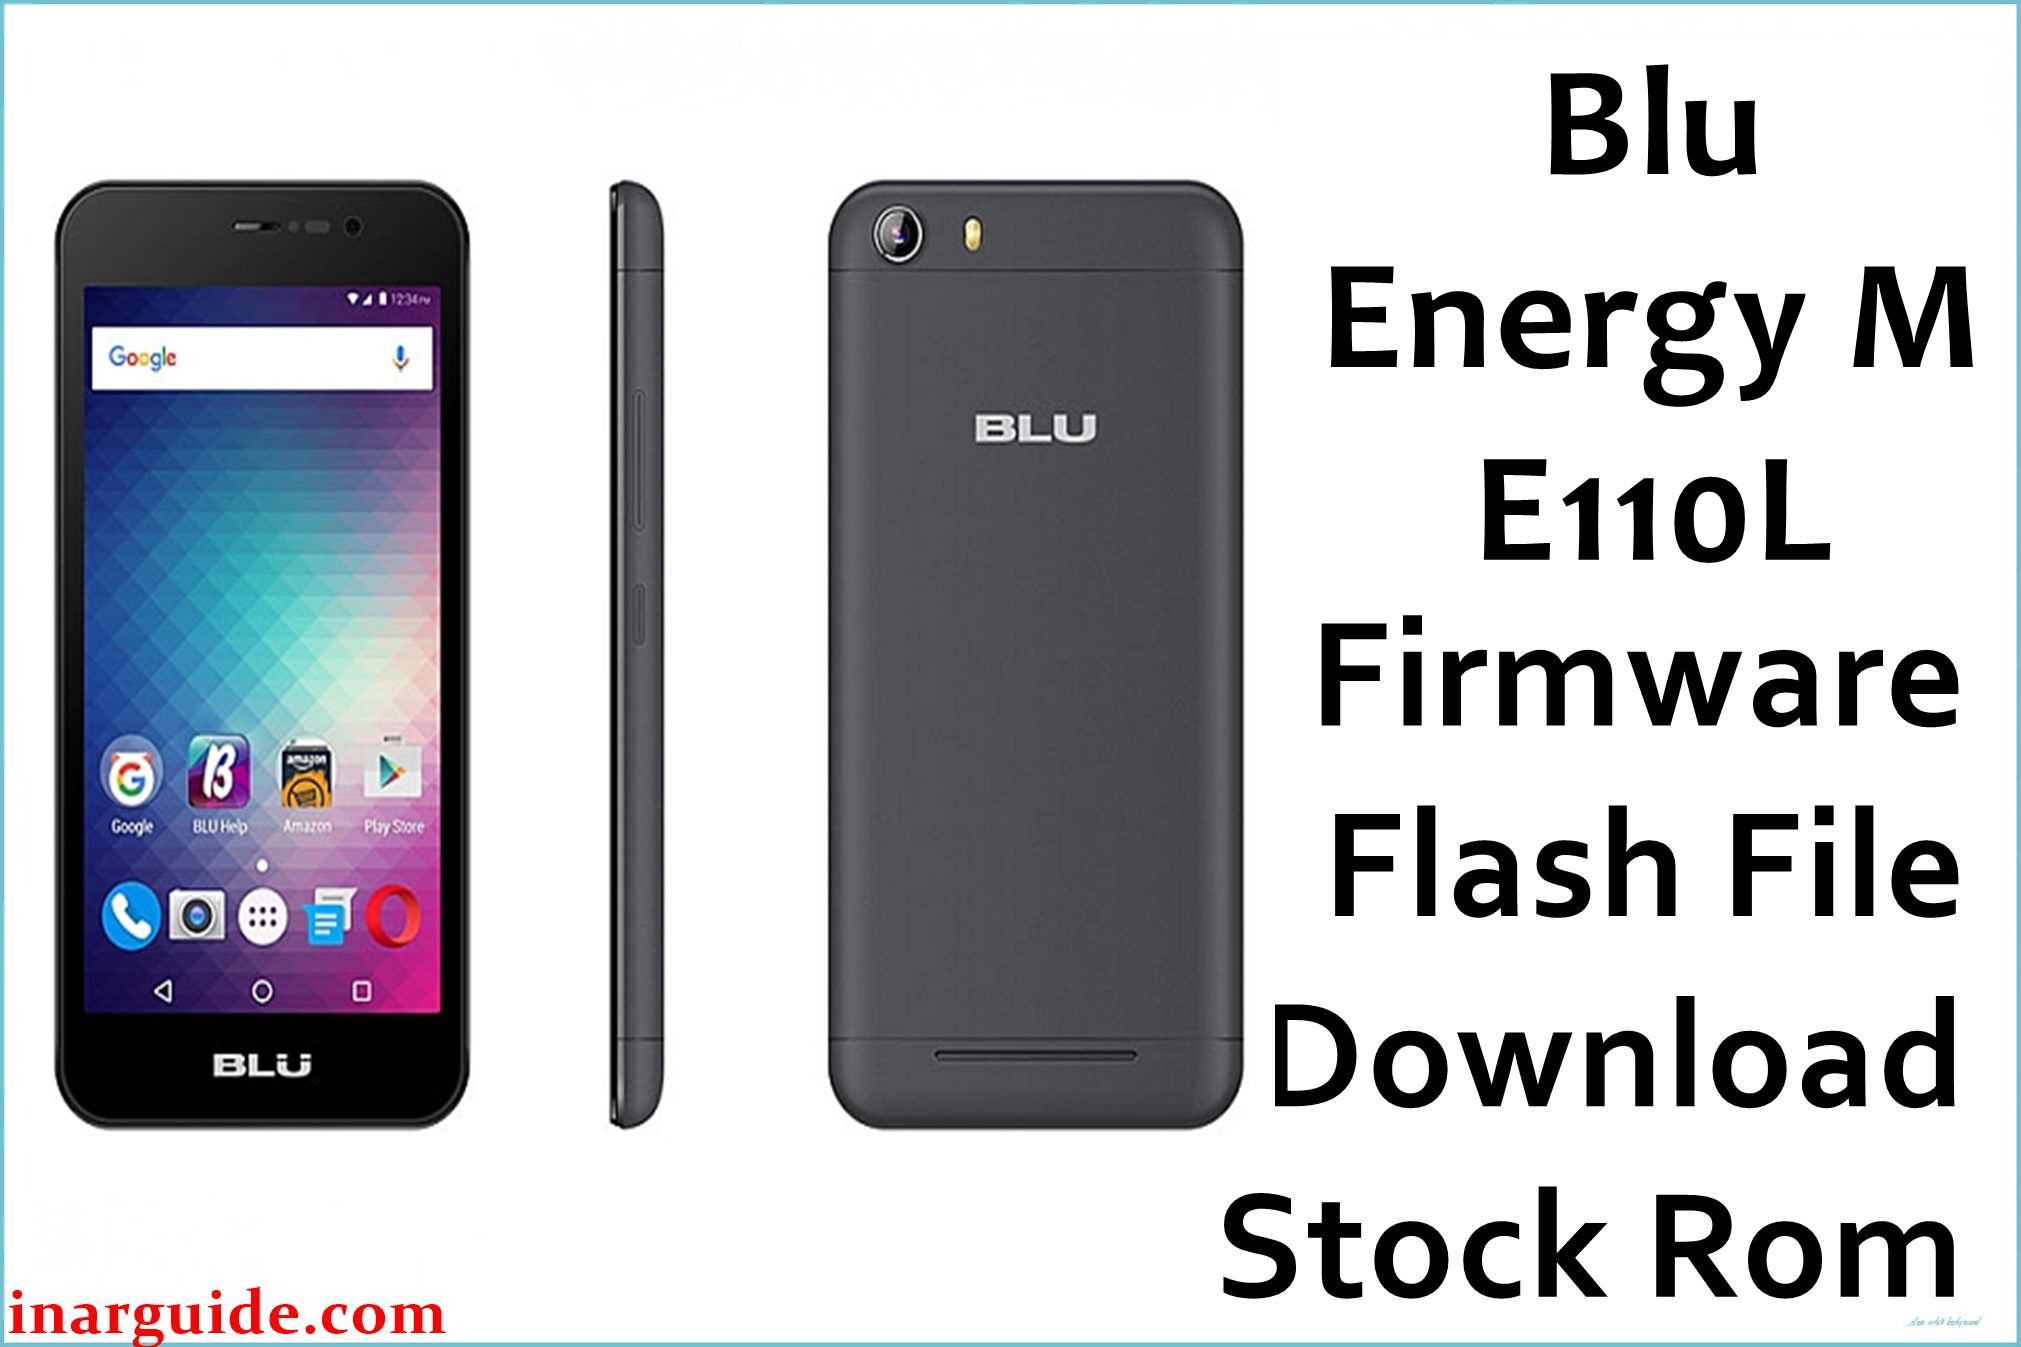 Blu Energy M E110L